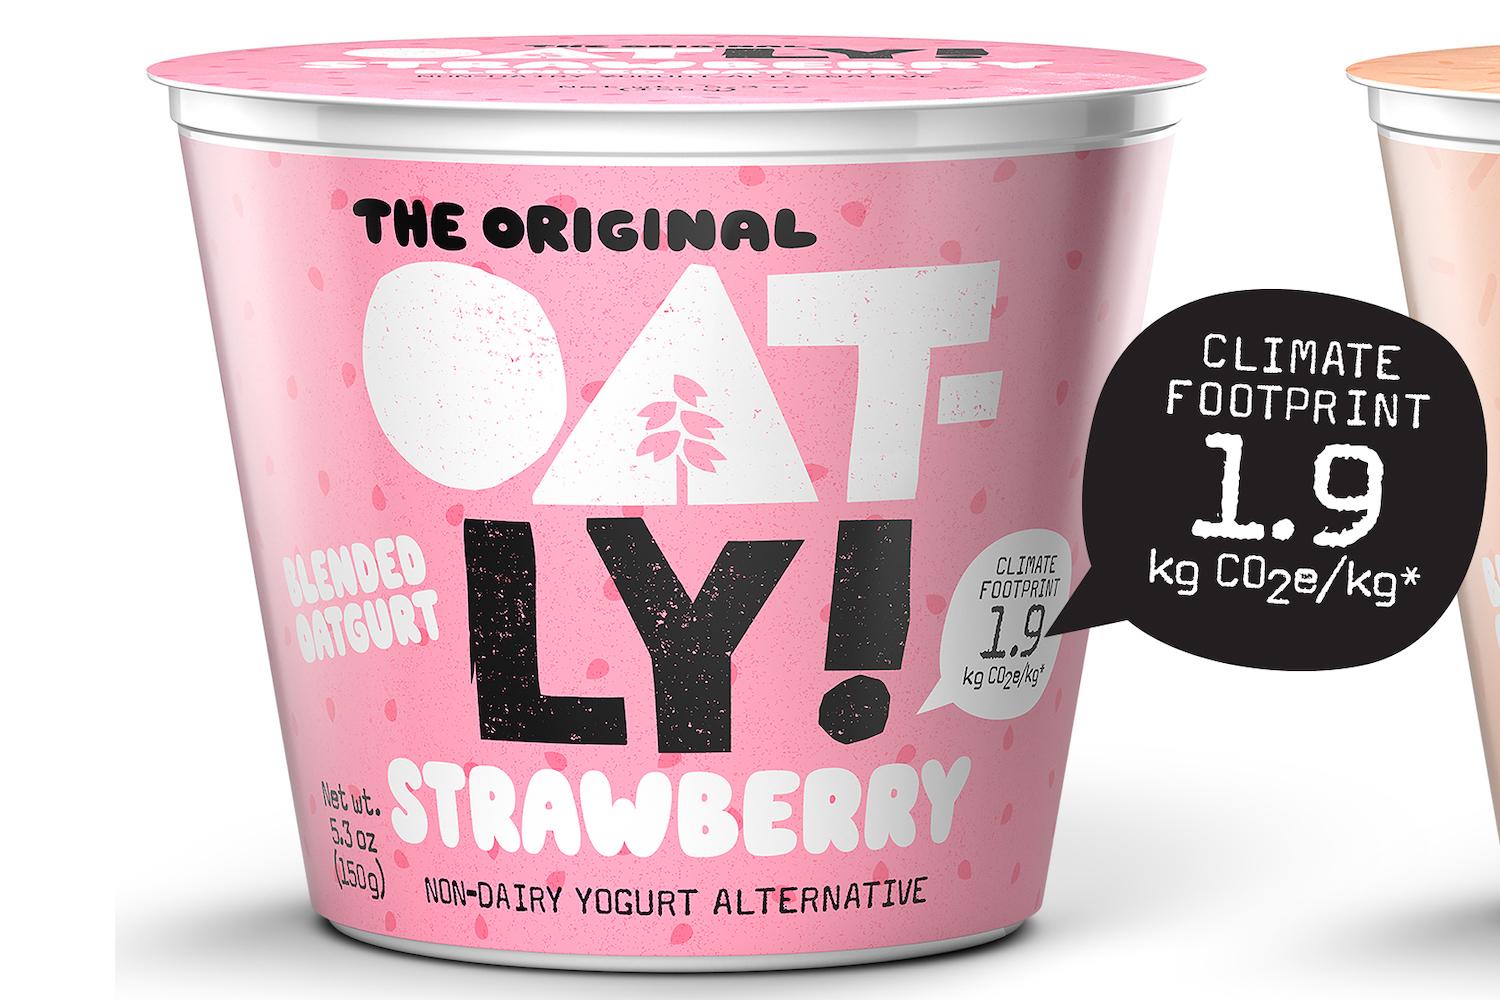 oatly strawberry yogurt carbon footprint labels 